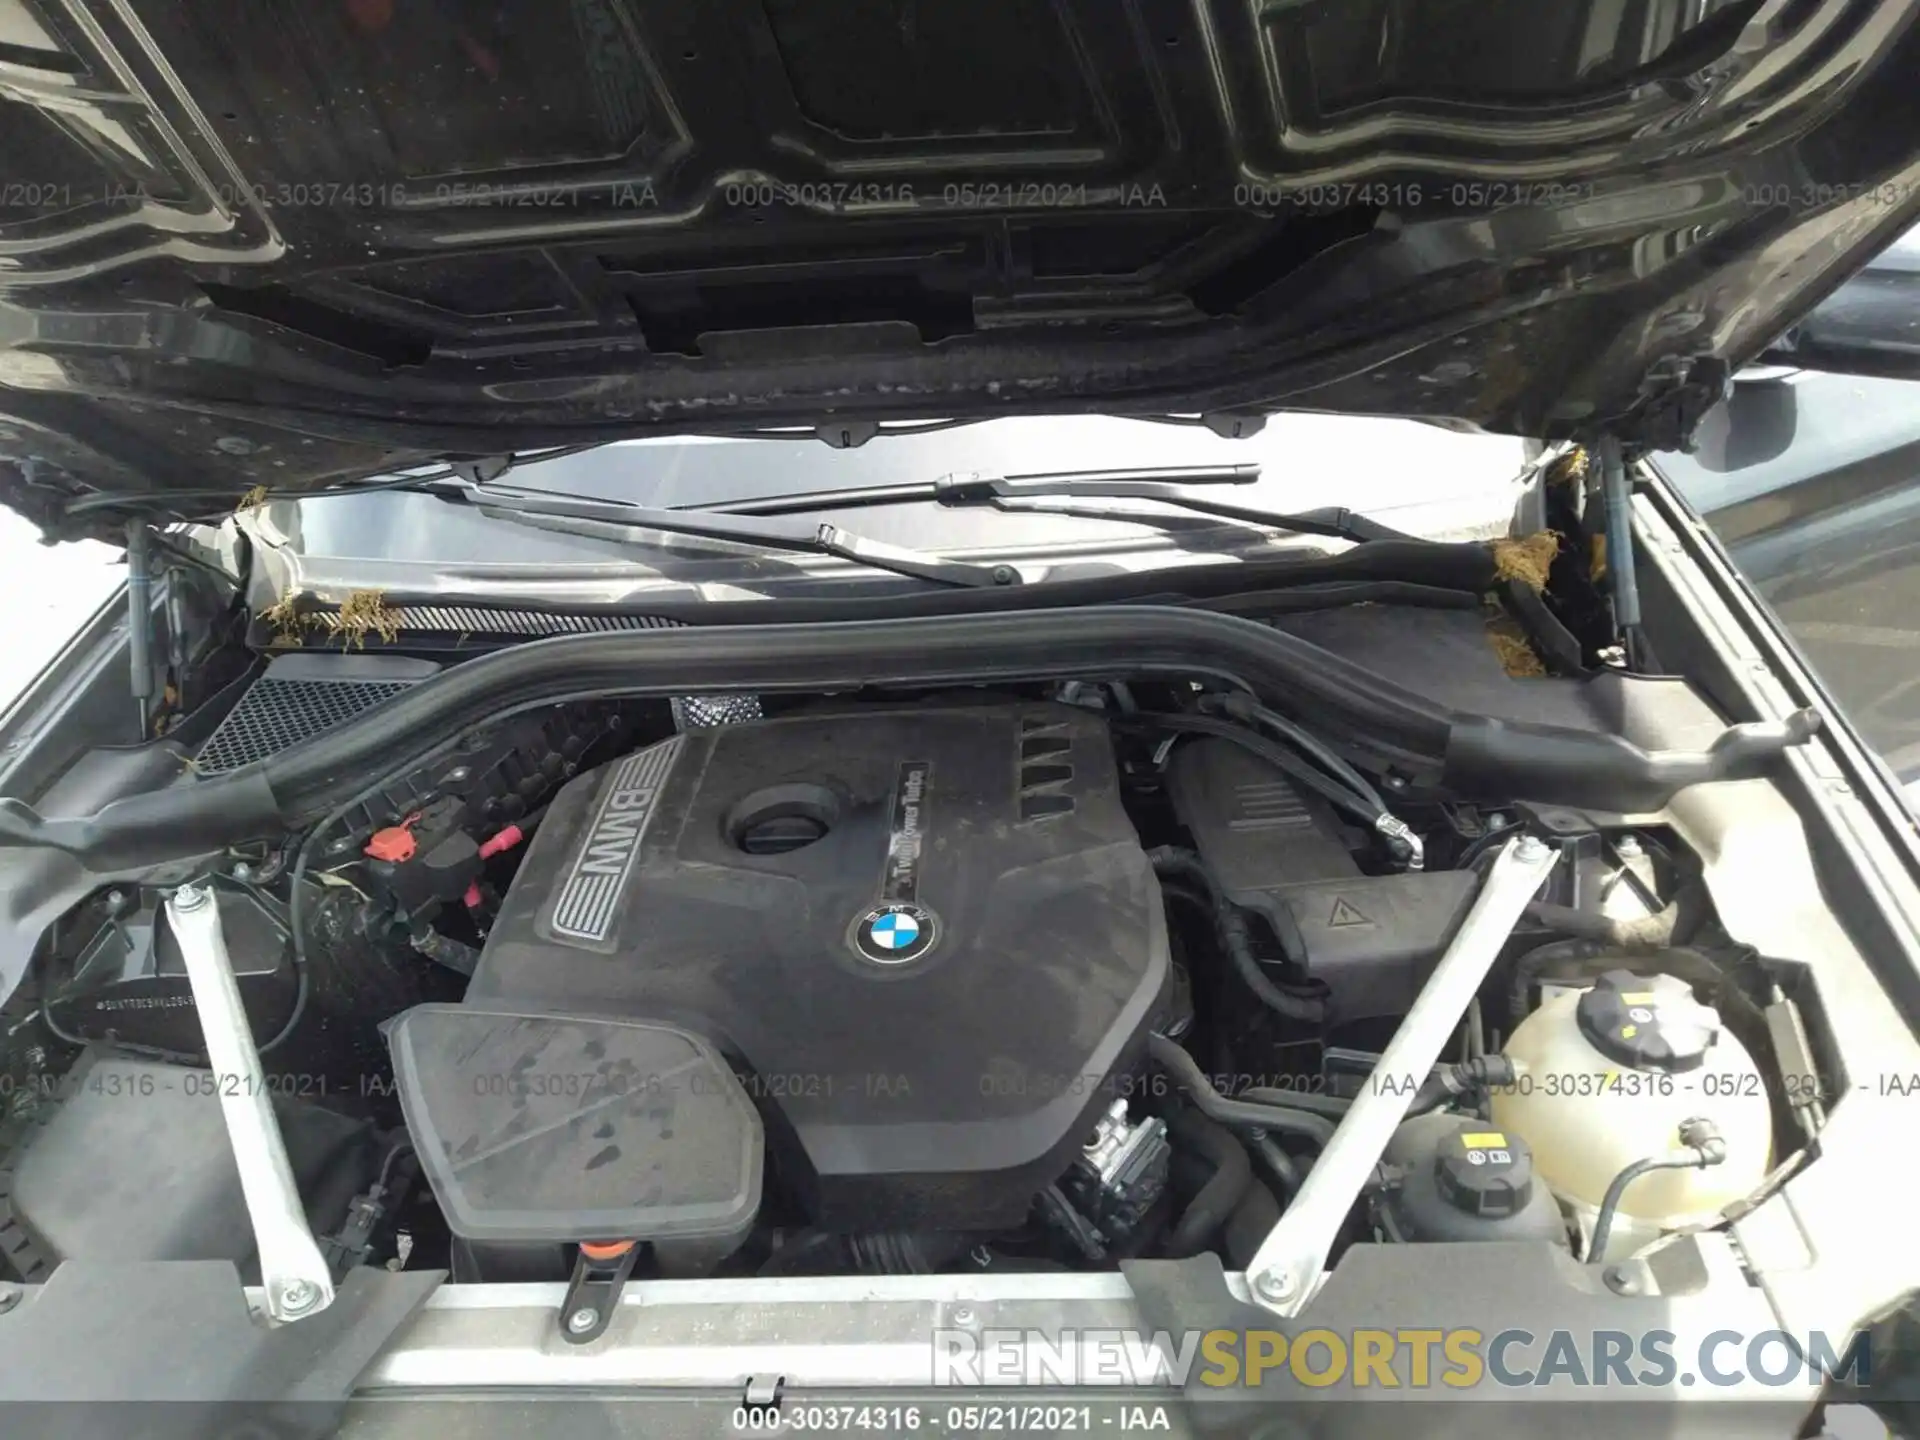 10 Photograph of a damaged car 5UXTR9C5XKLD94947 BMW X3 2019